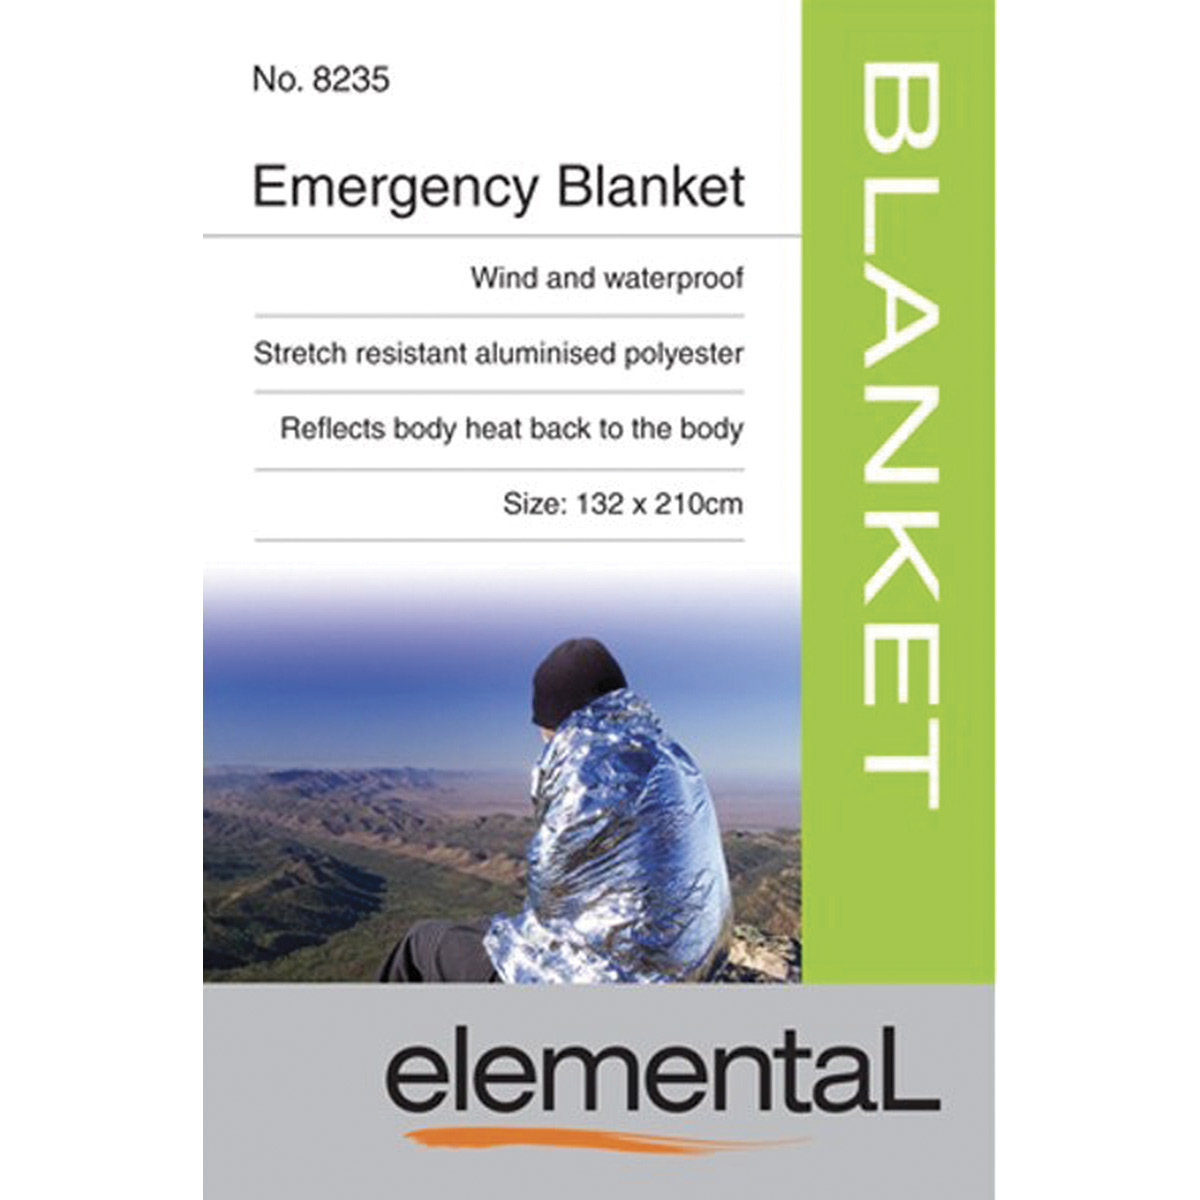 Elemental Emergency Blanket